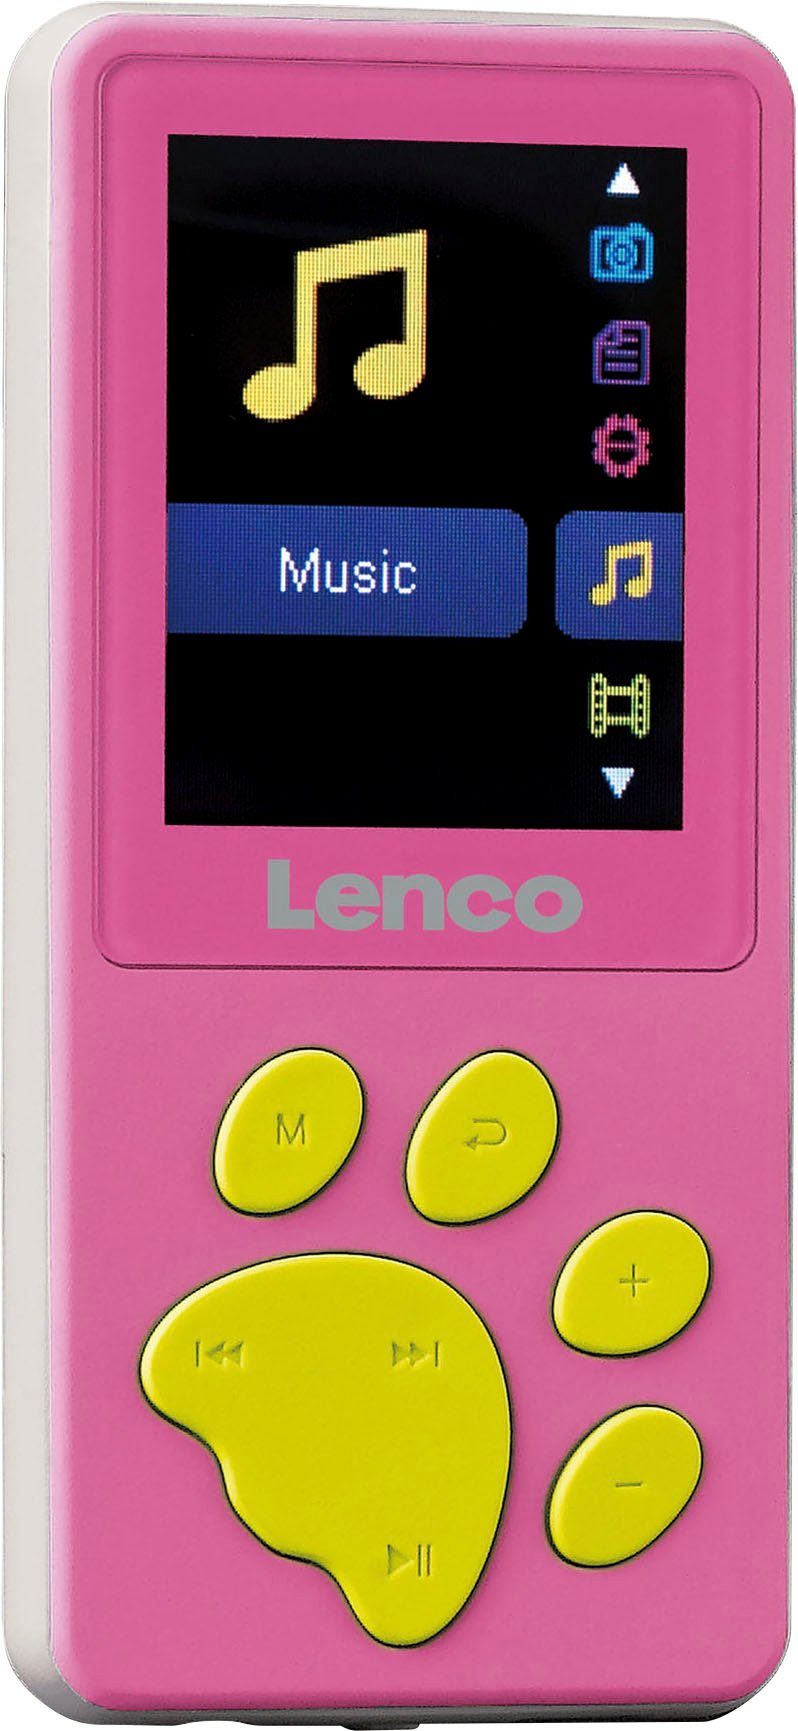 Xemio-560 Lenco MP4-Player Pink MP3-Player (128 GB)